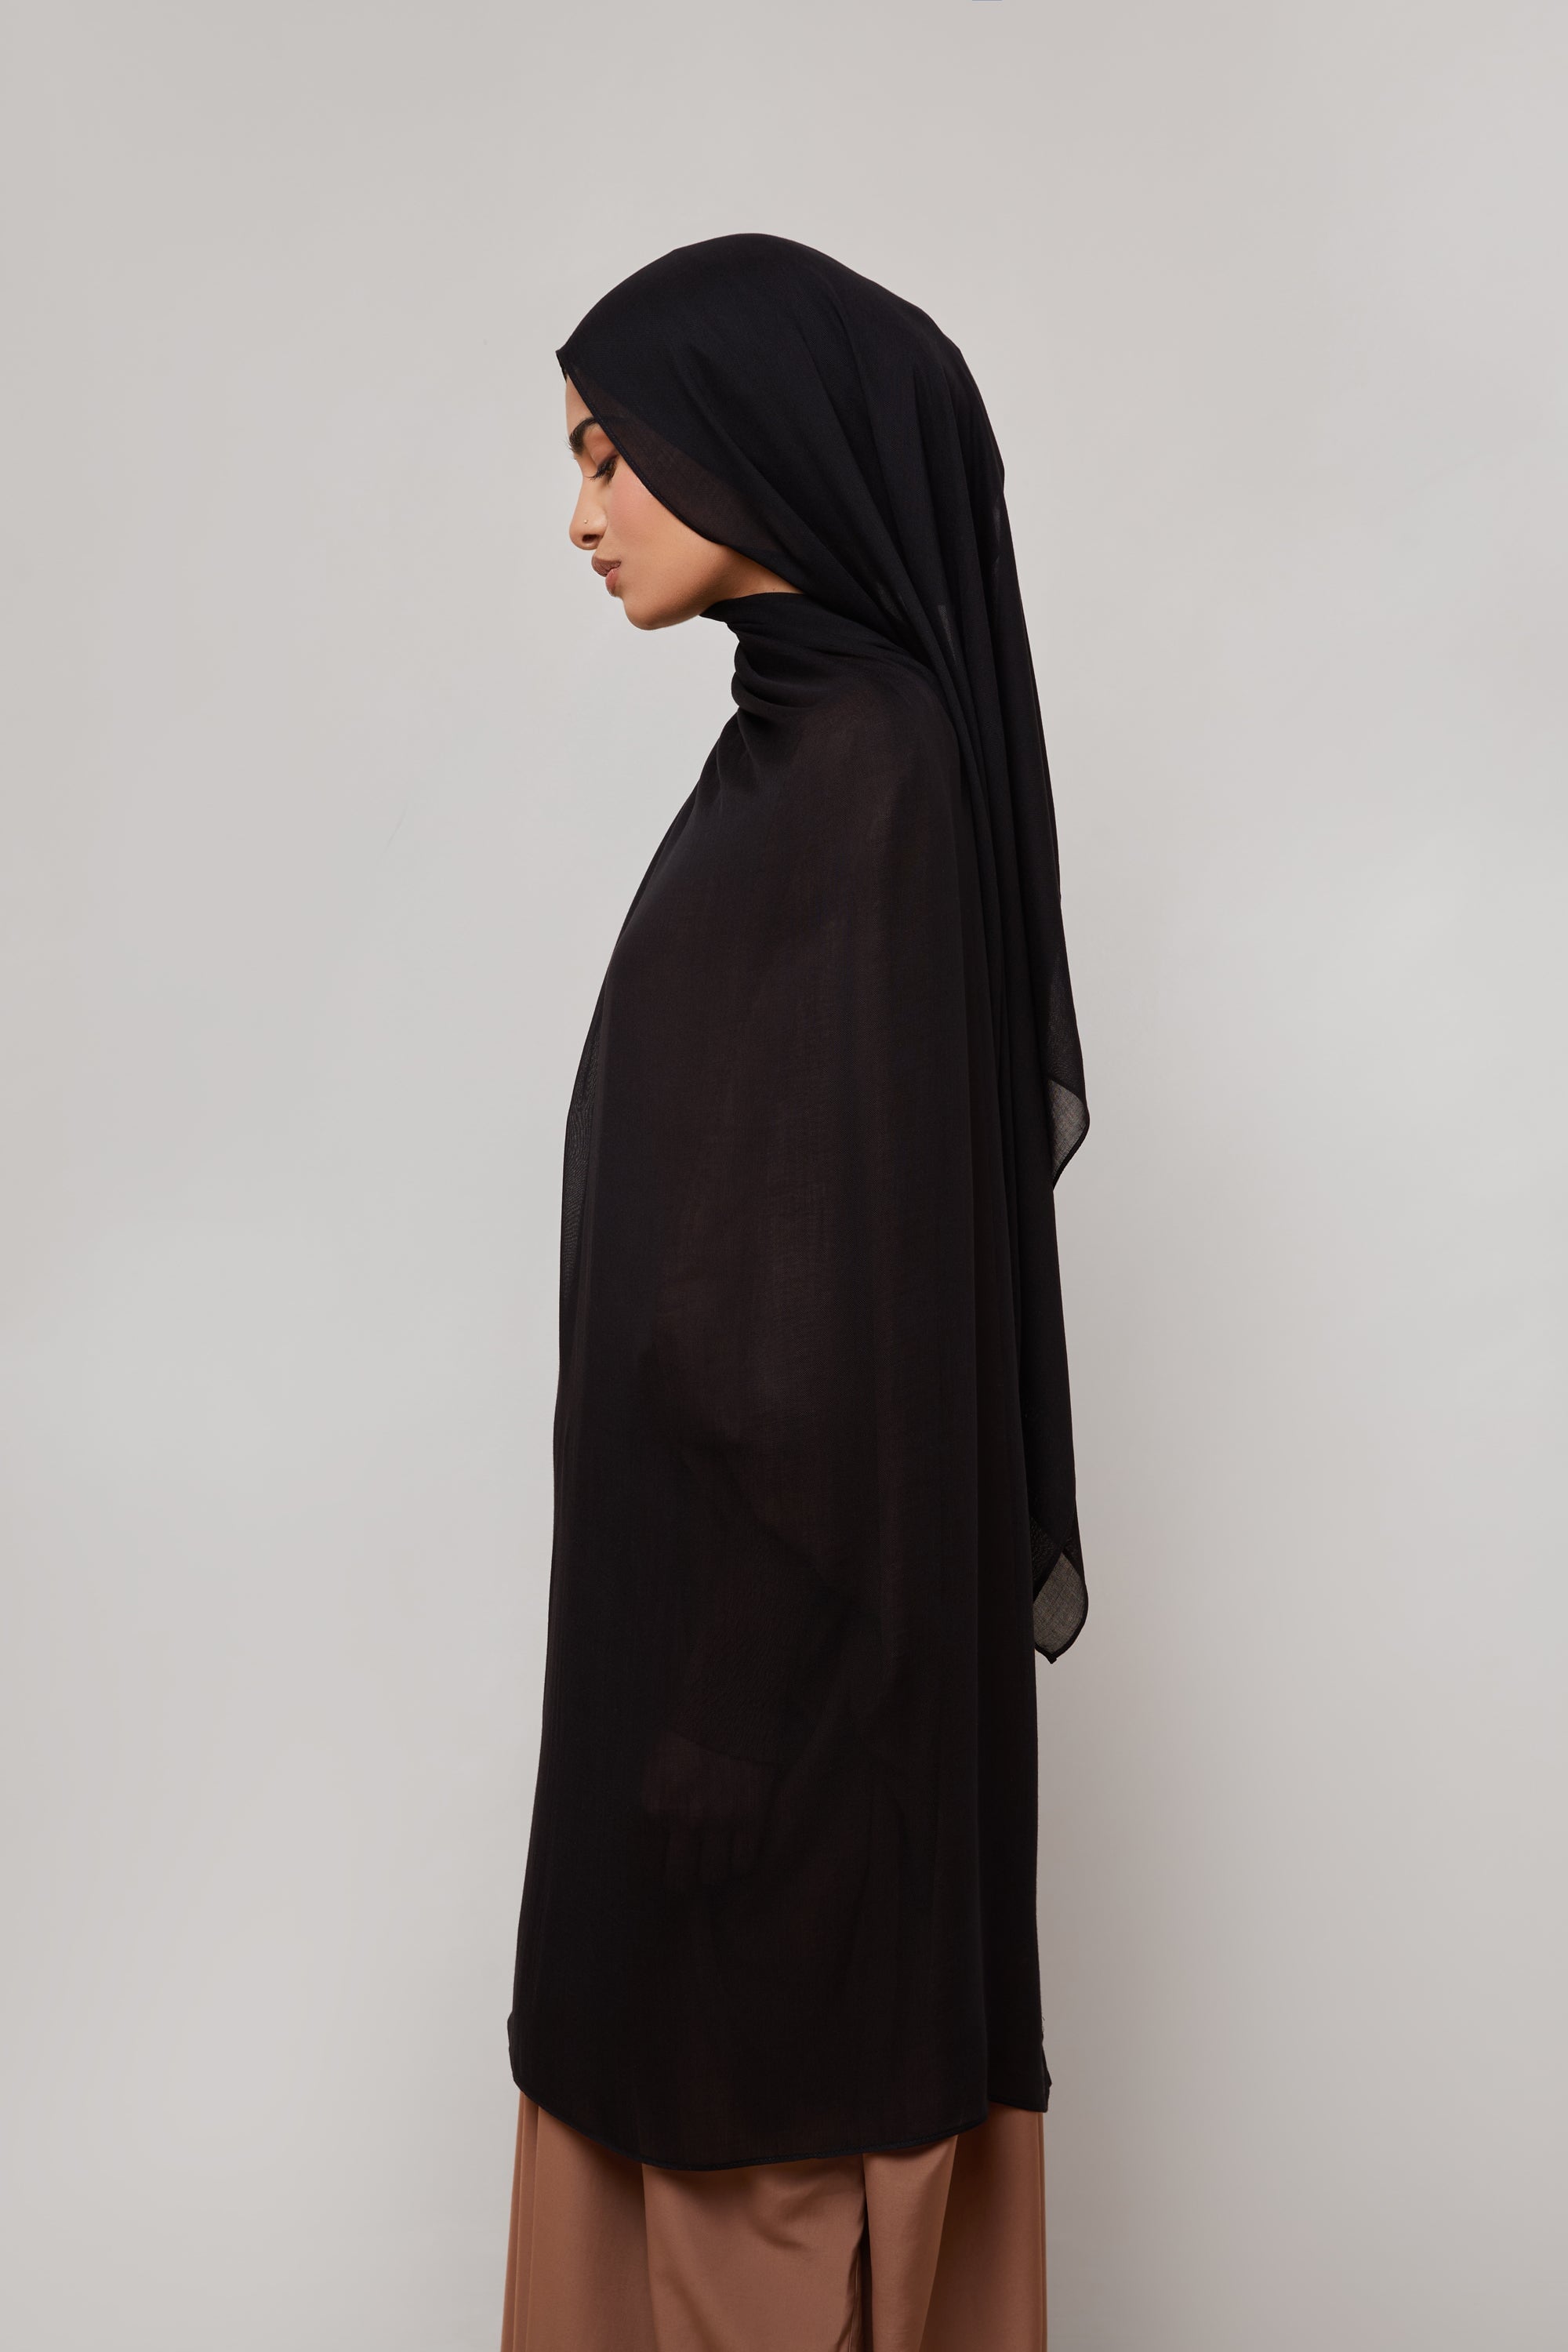 Bamboo Woven Hijab - Black epschoolboard 